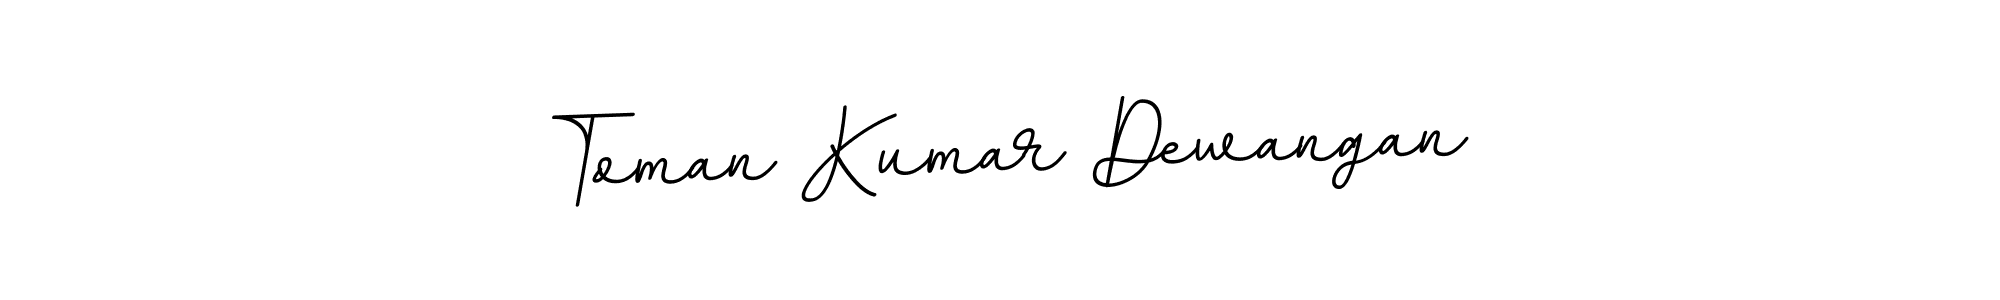 How to Draw Toman Kumar Dewangan signature style? BallpointsItalic-DORy9 is a latest design signature styles for name Toman Kumar Dewangan. Toman Kumar Dewangan signature style 11 images and pictures png